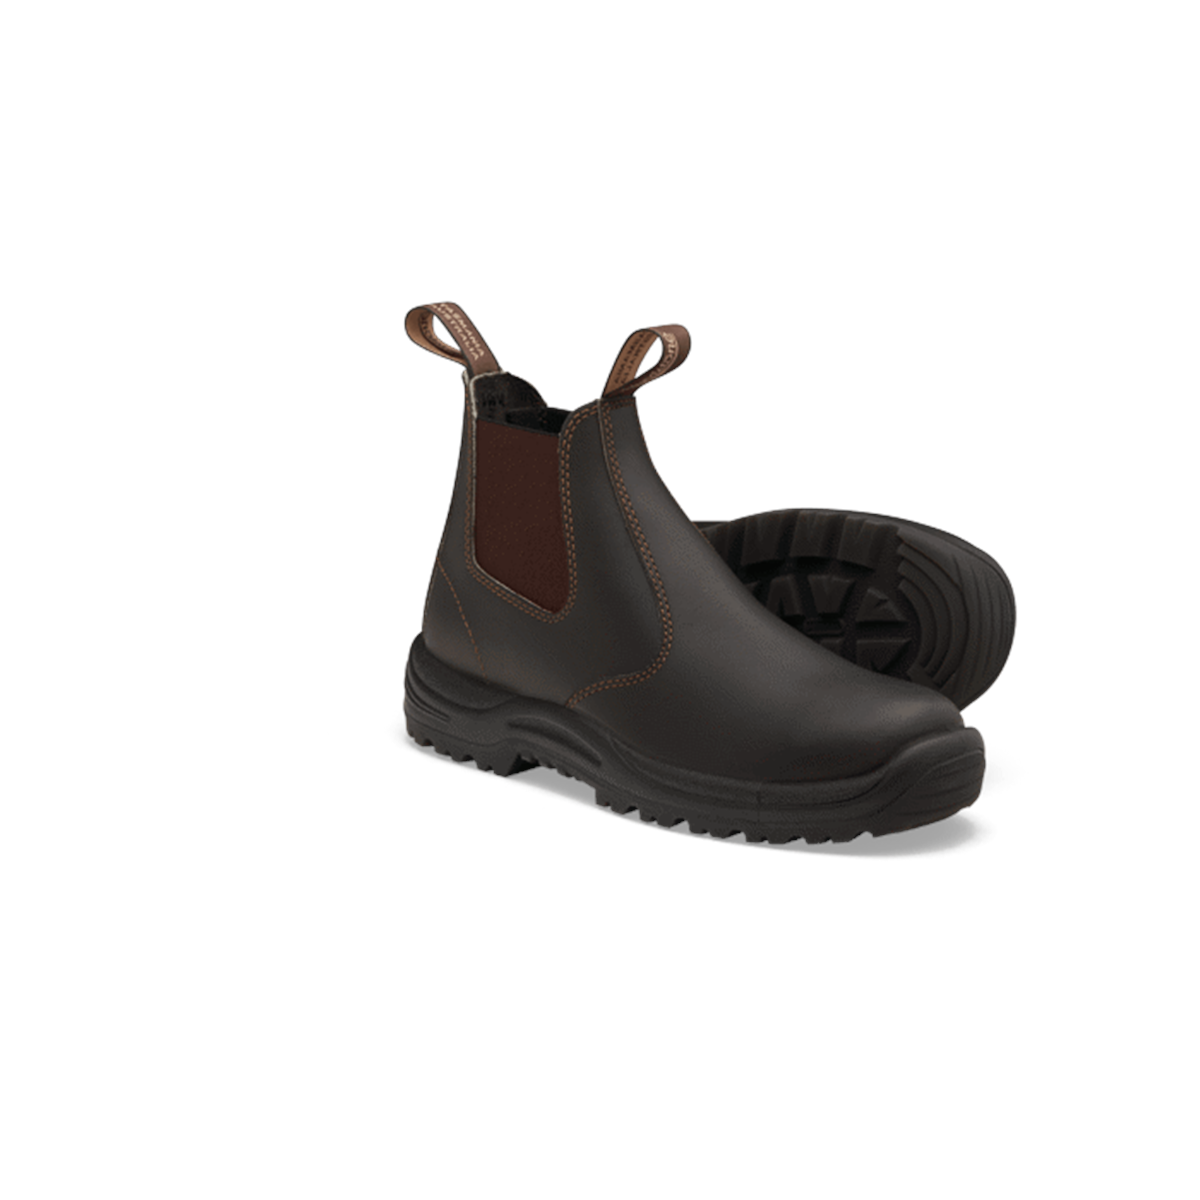 BLU490-075 490 Soft Toe Elastic Side Slip-on Boot, Stout Brown - Size 8.5 -  Blundstone